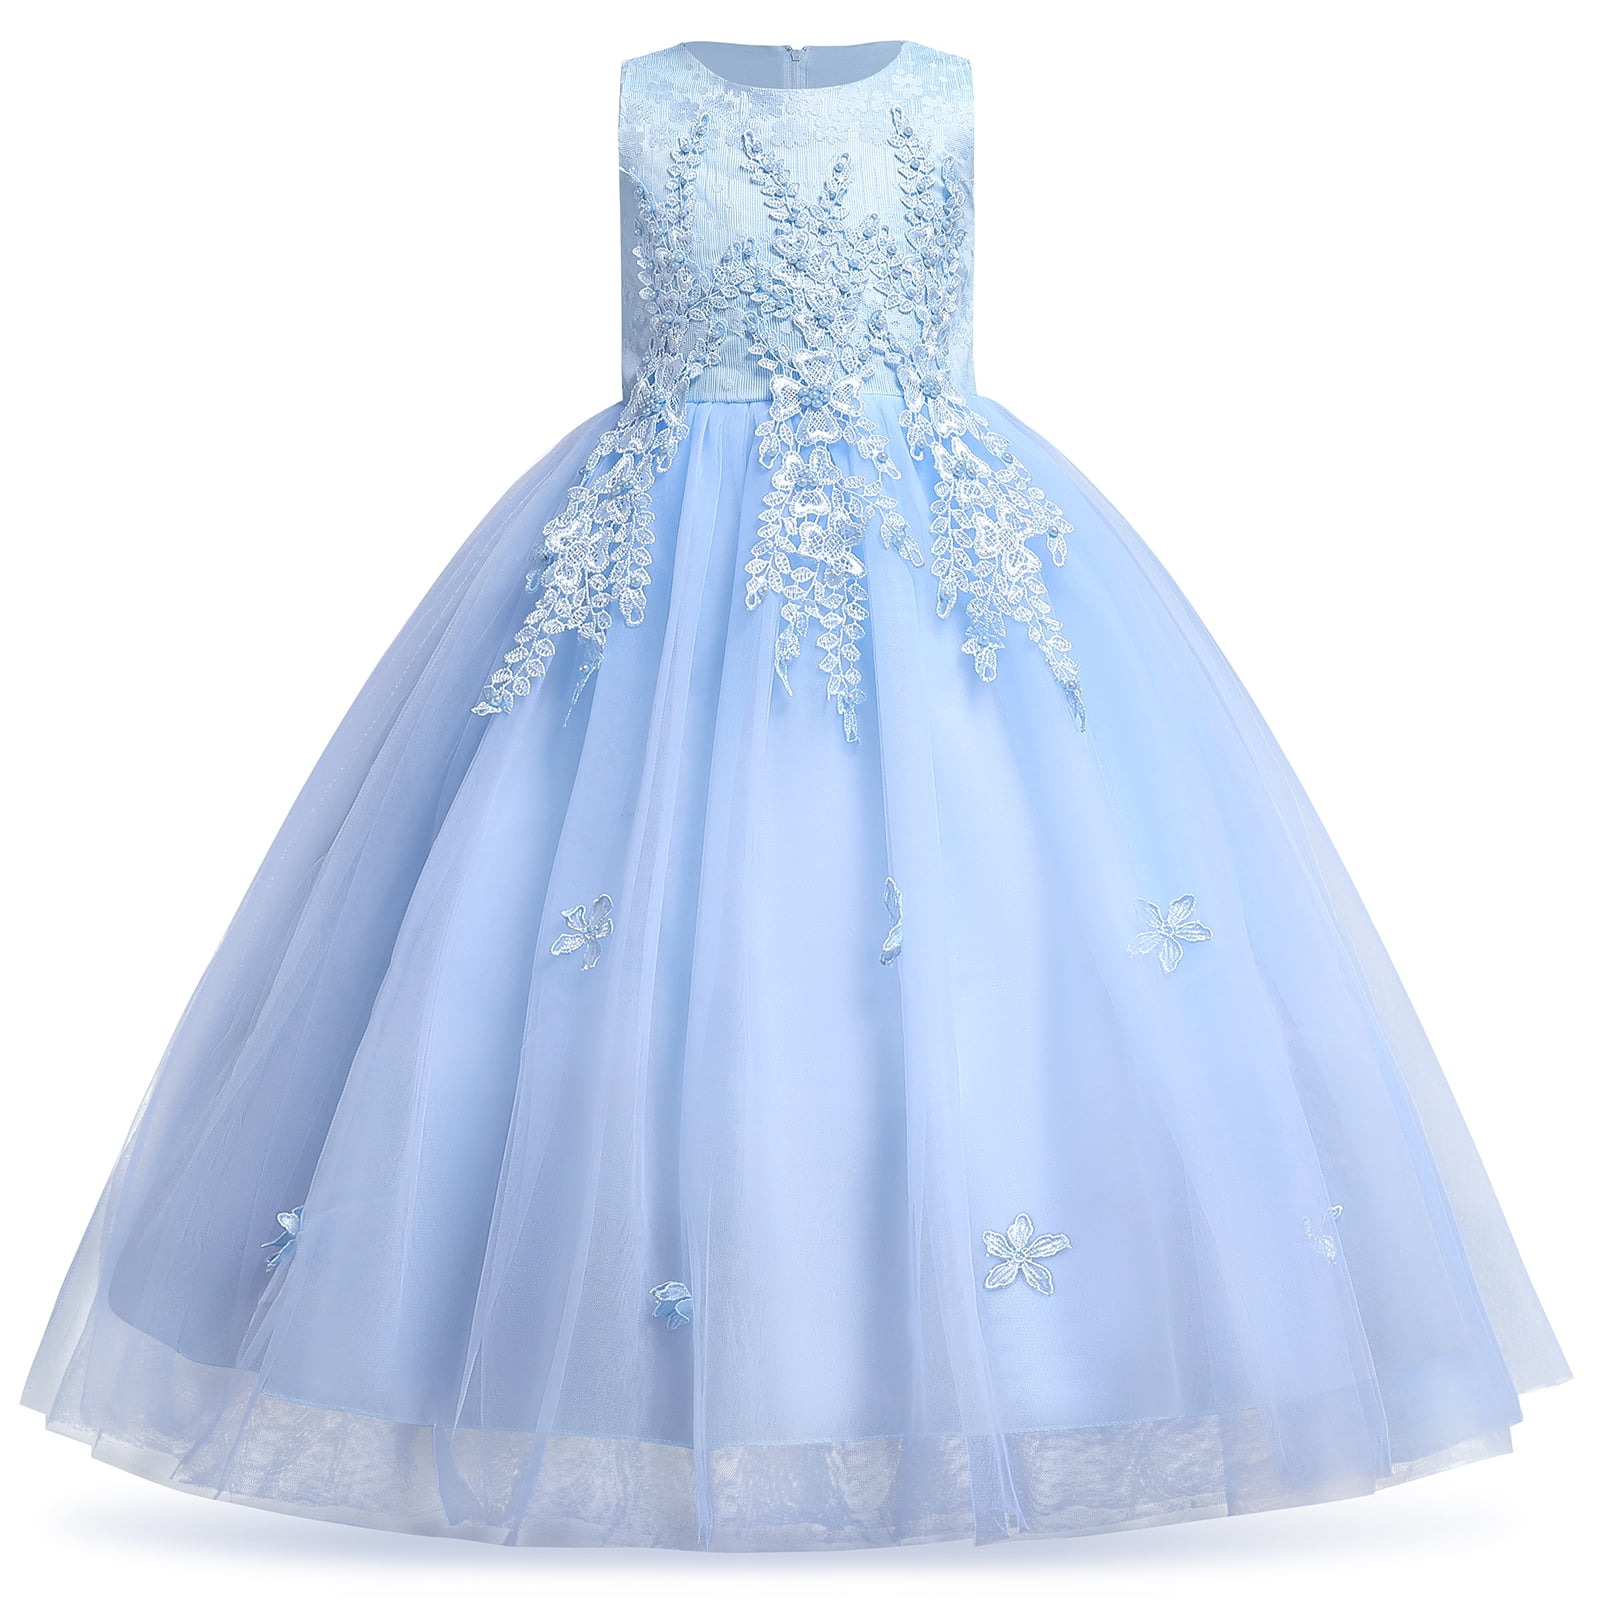 girl sleeveless embroidery princess pageant wedding| Alibaba.com